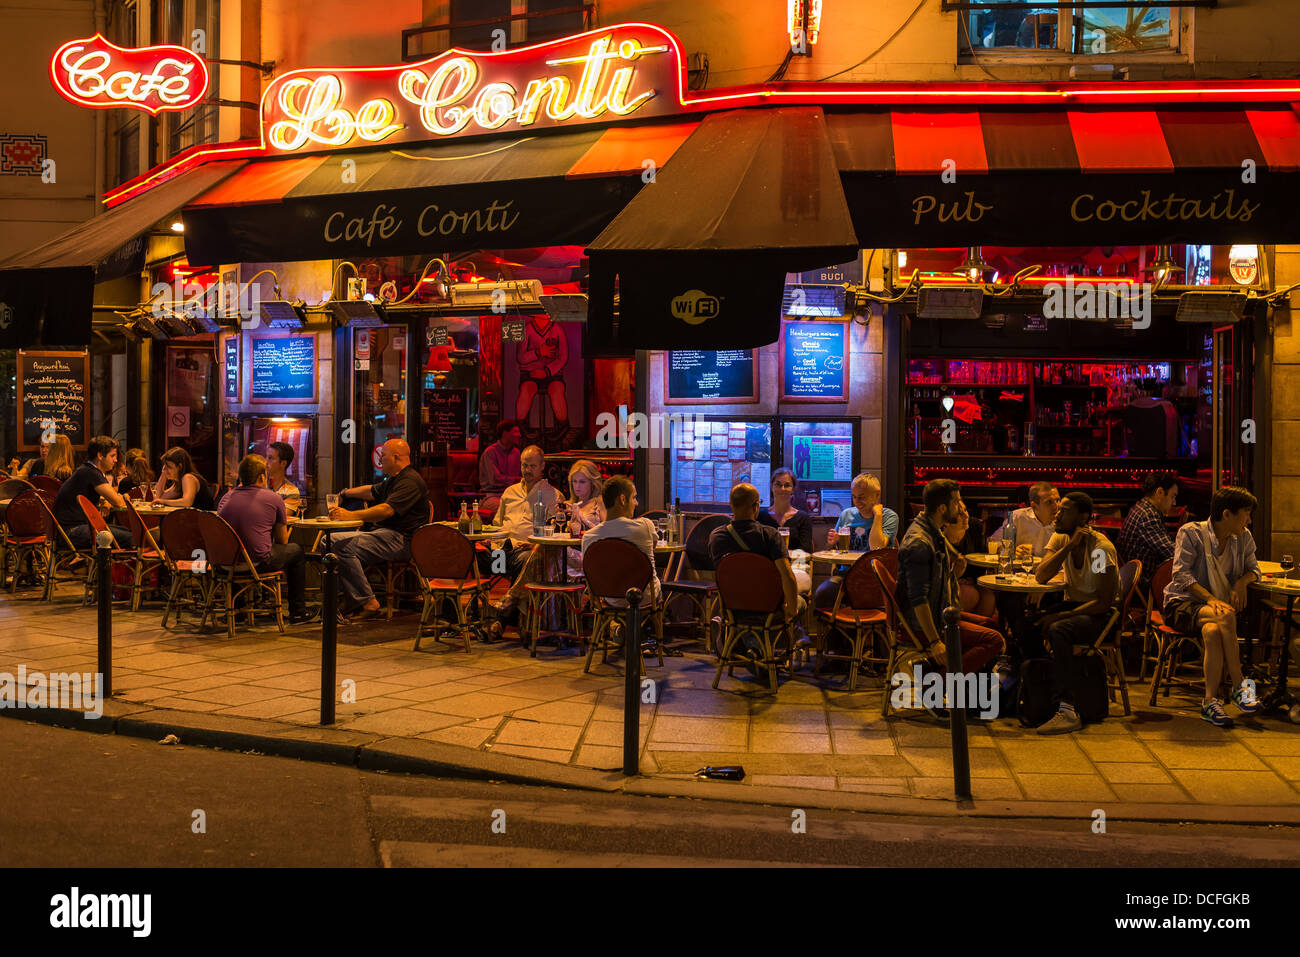 La vida nocturna en Saint Germain, Paris. Foto de stock